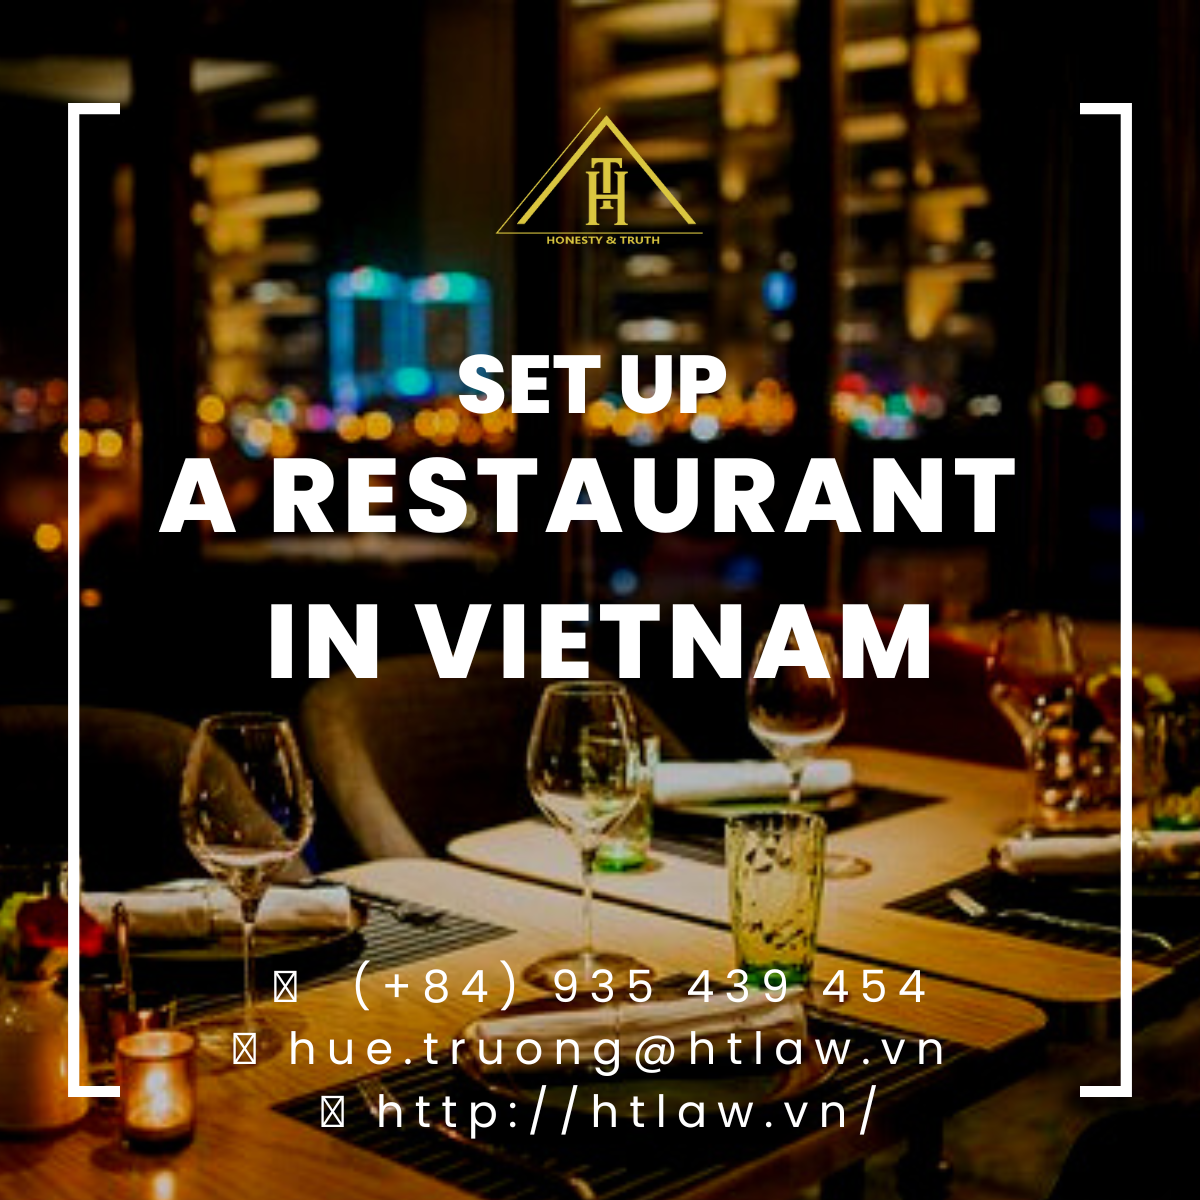 set up restaurant in vietnam - htlaw